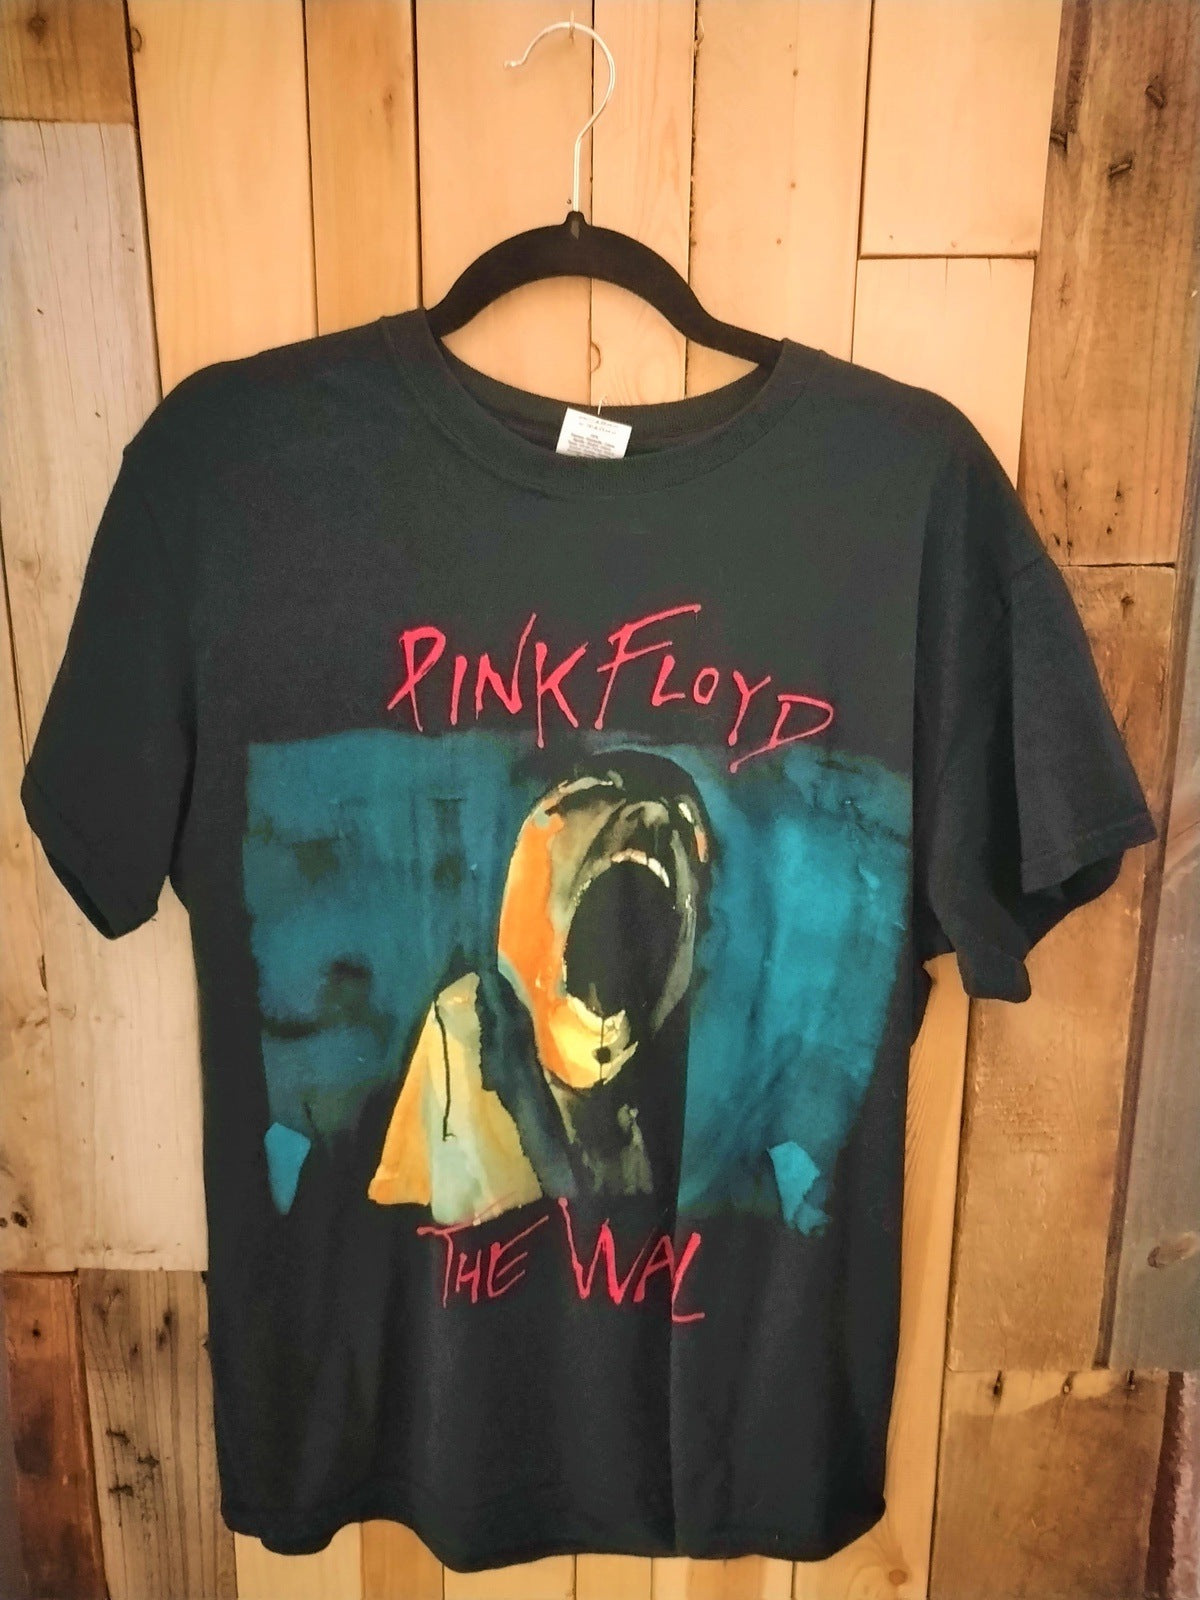 Pink Floyd "The Wall" T Shirt Size Medium